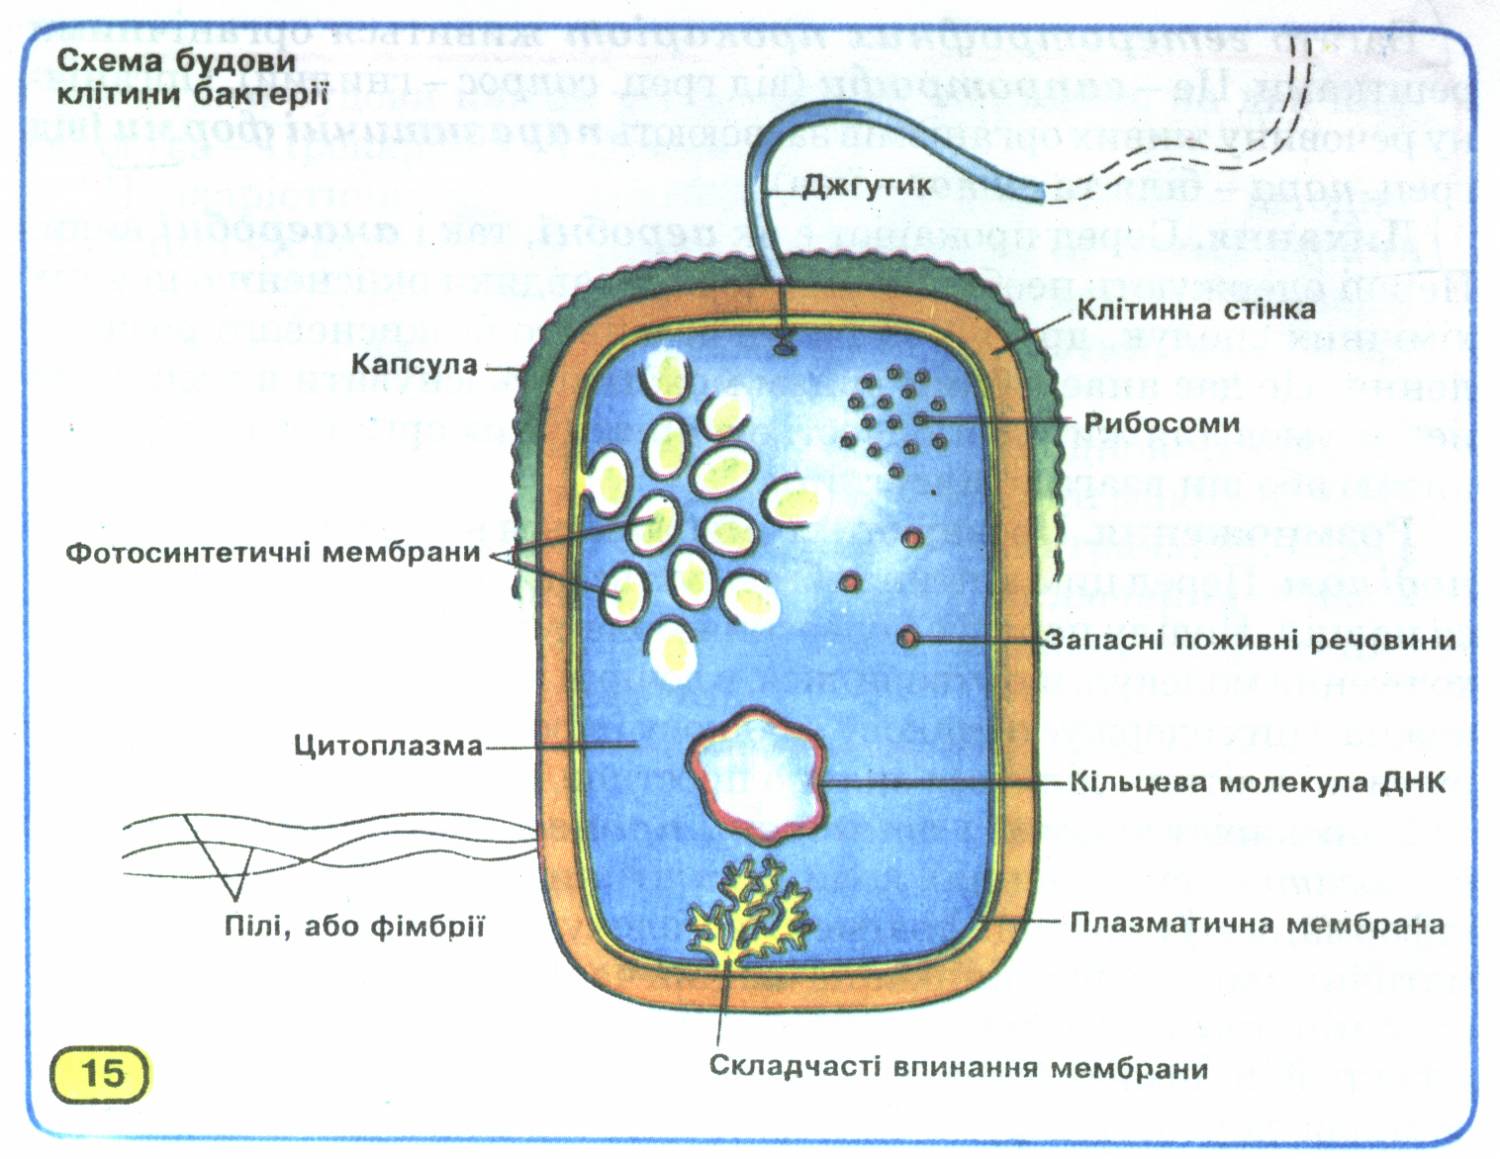 Оболочка клетки прокариота